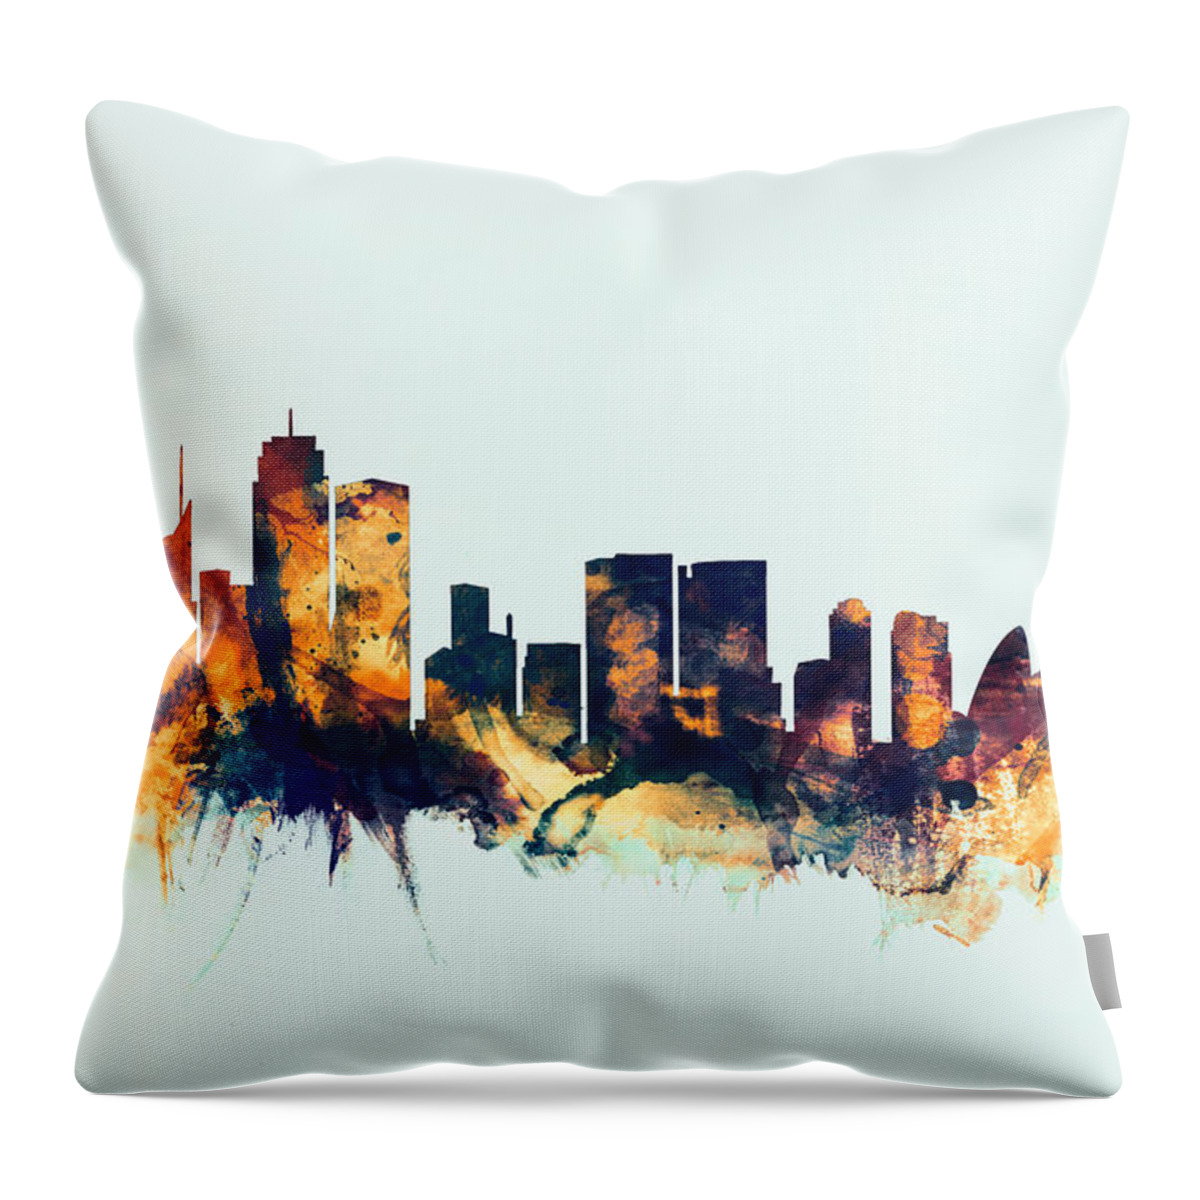 Sydney Throw Pillow featuring the digital art Sydney Australia Skyline by Michael Tompsett